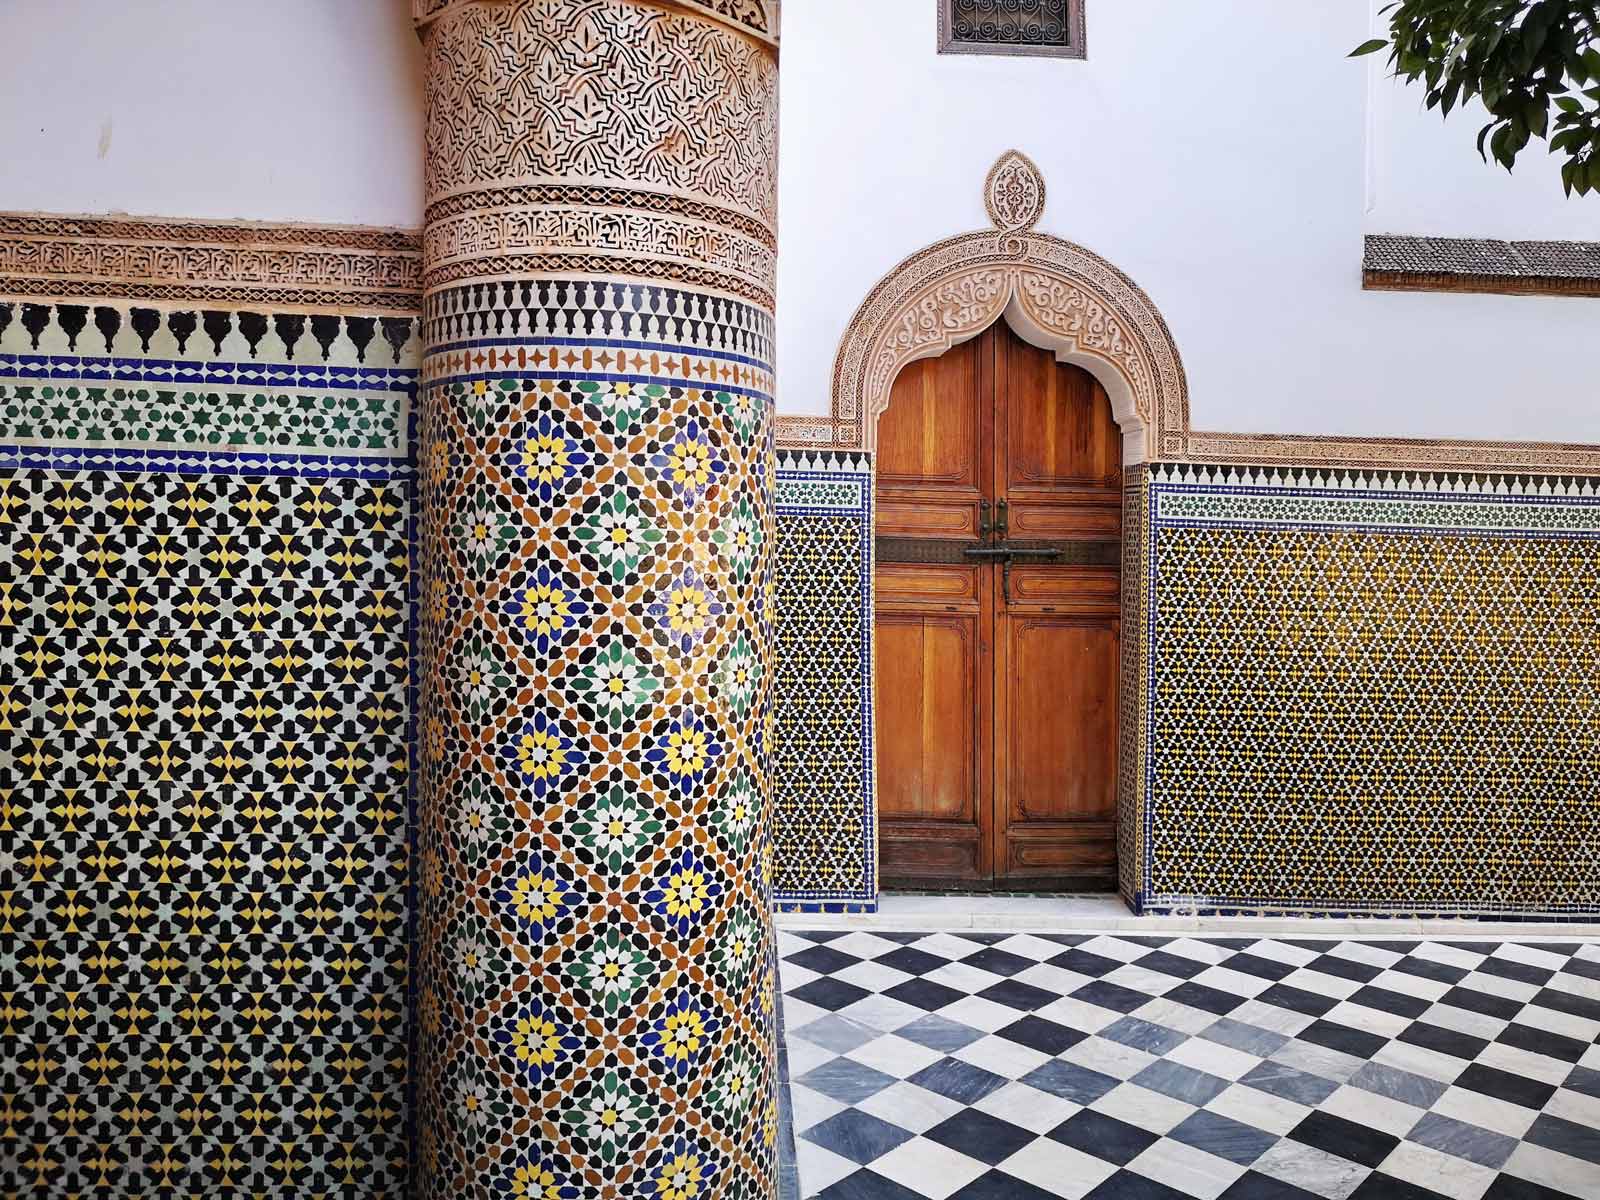 placs to visit in marrakech dar el bacha palace